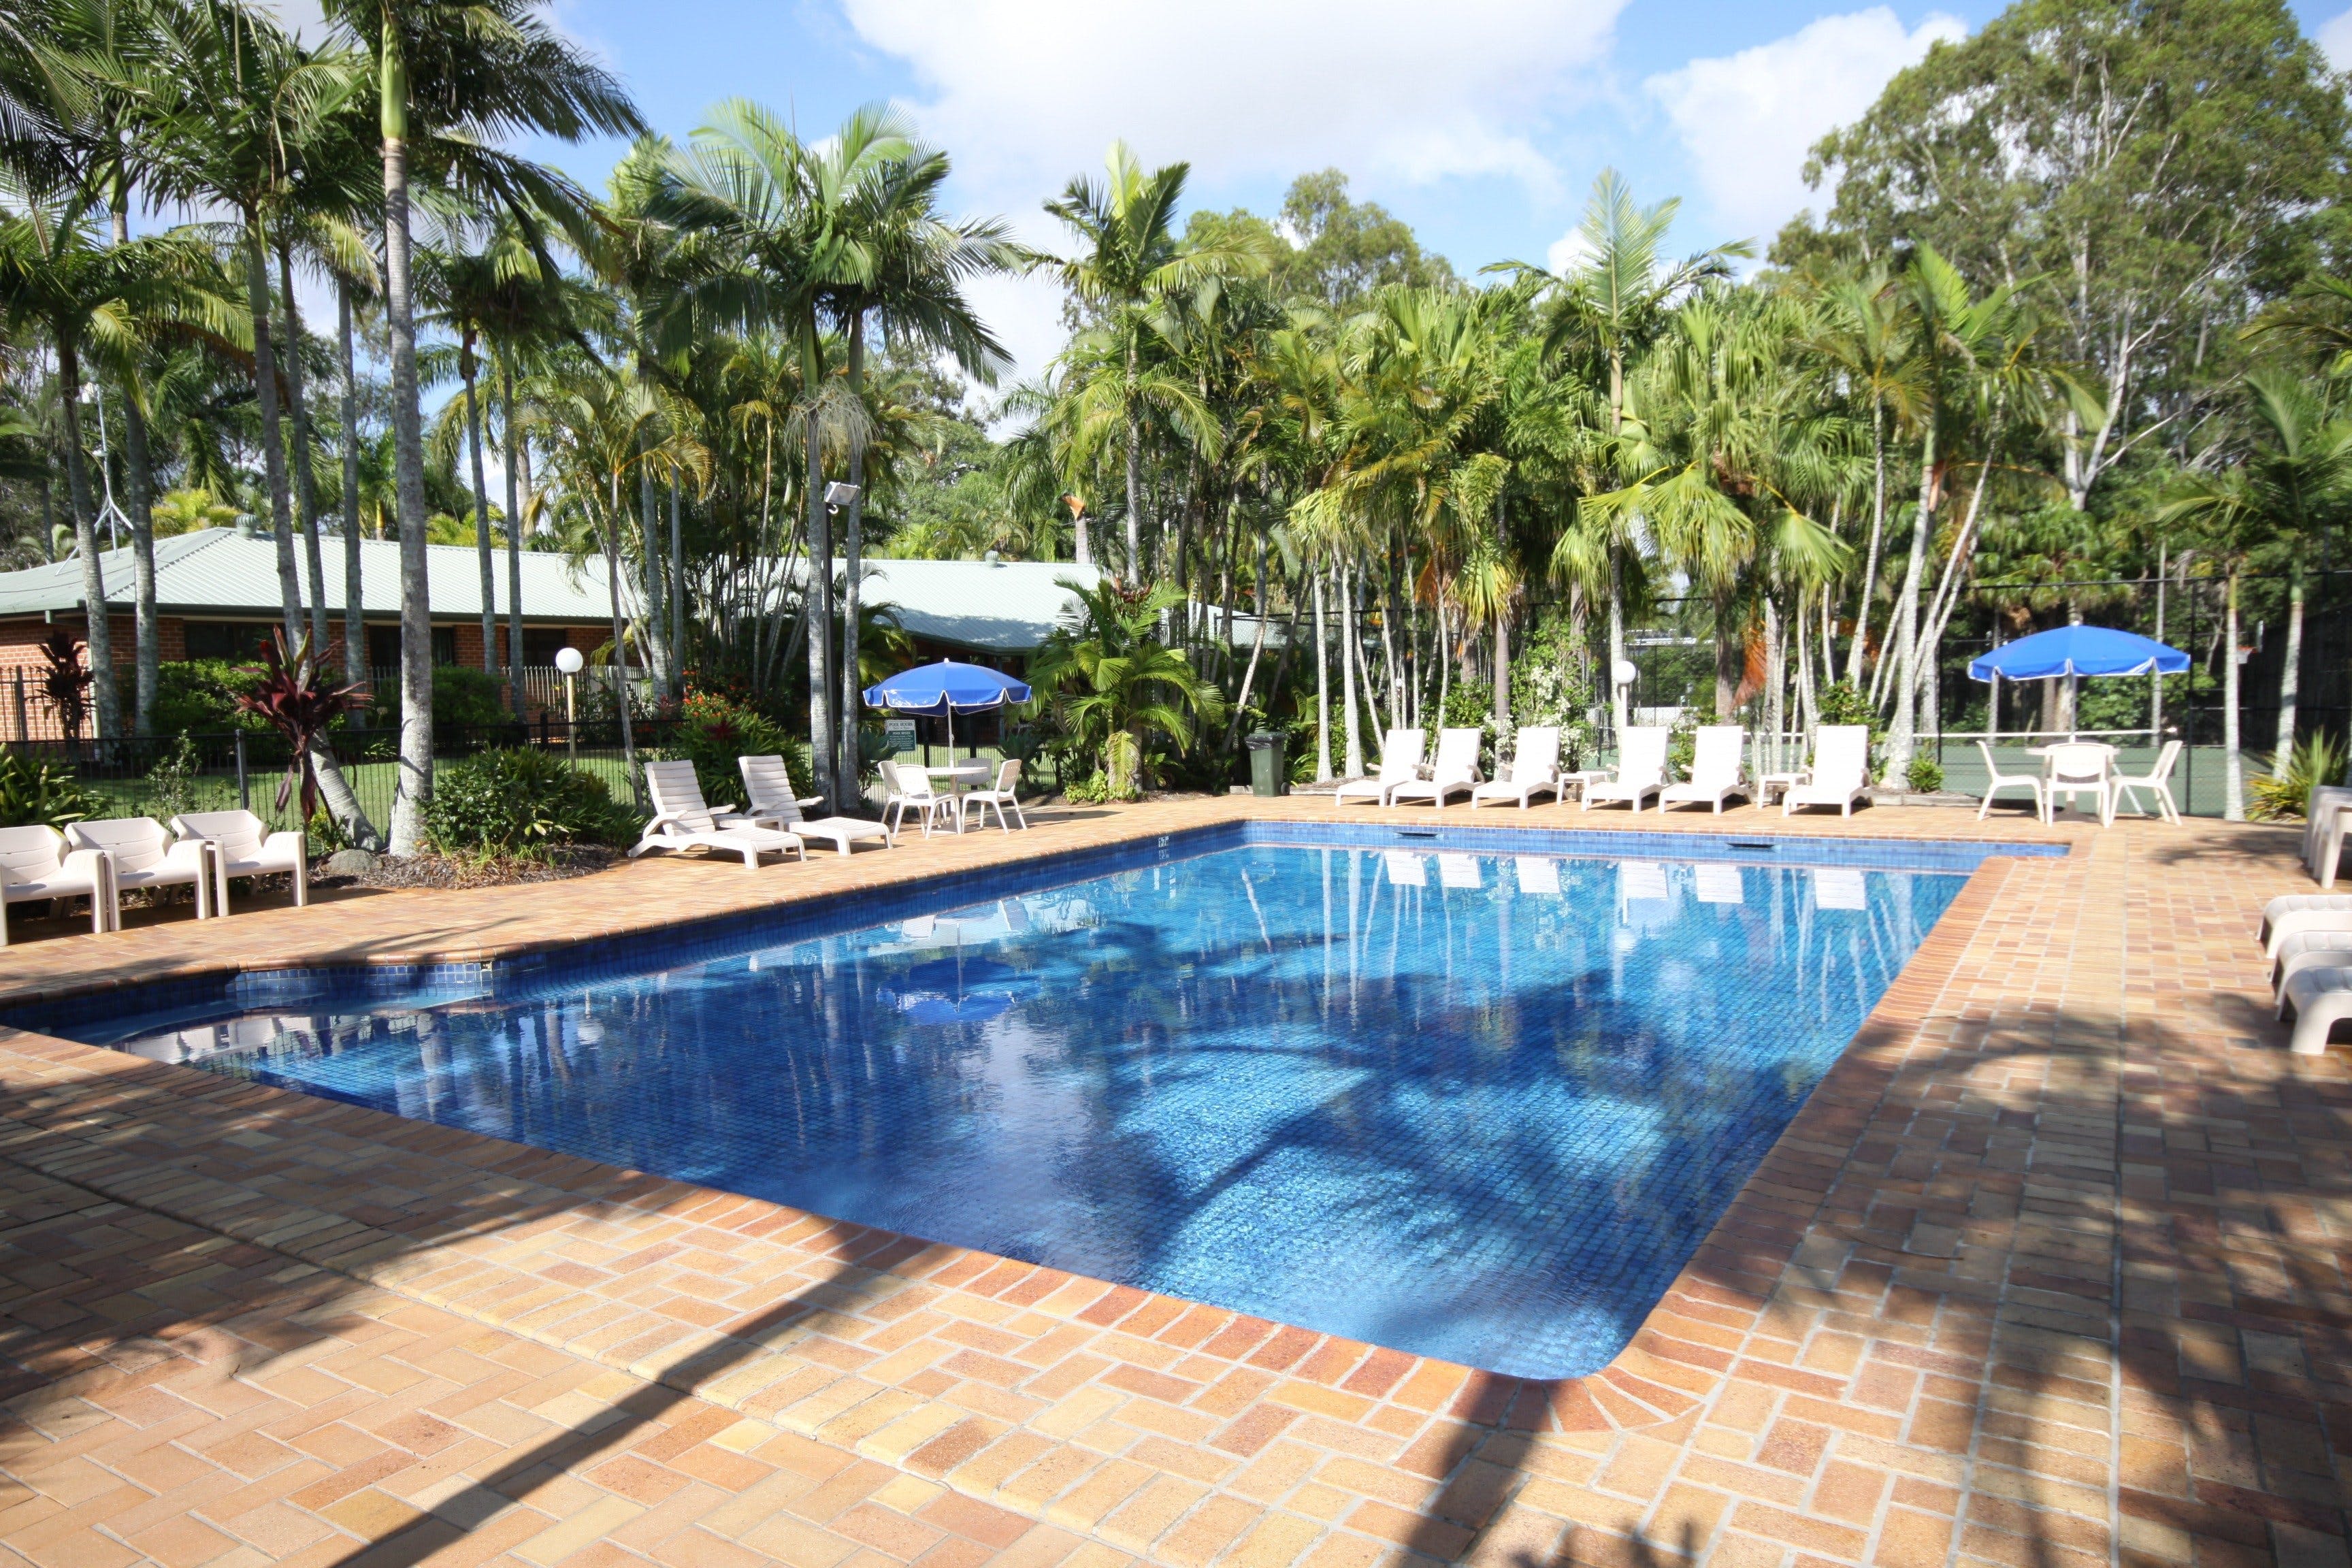 Brisbane Gateway Resort - Accommodation in Brisbane